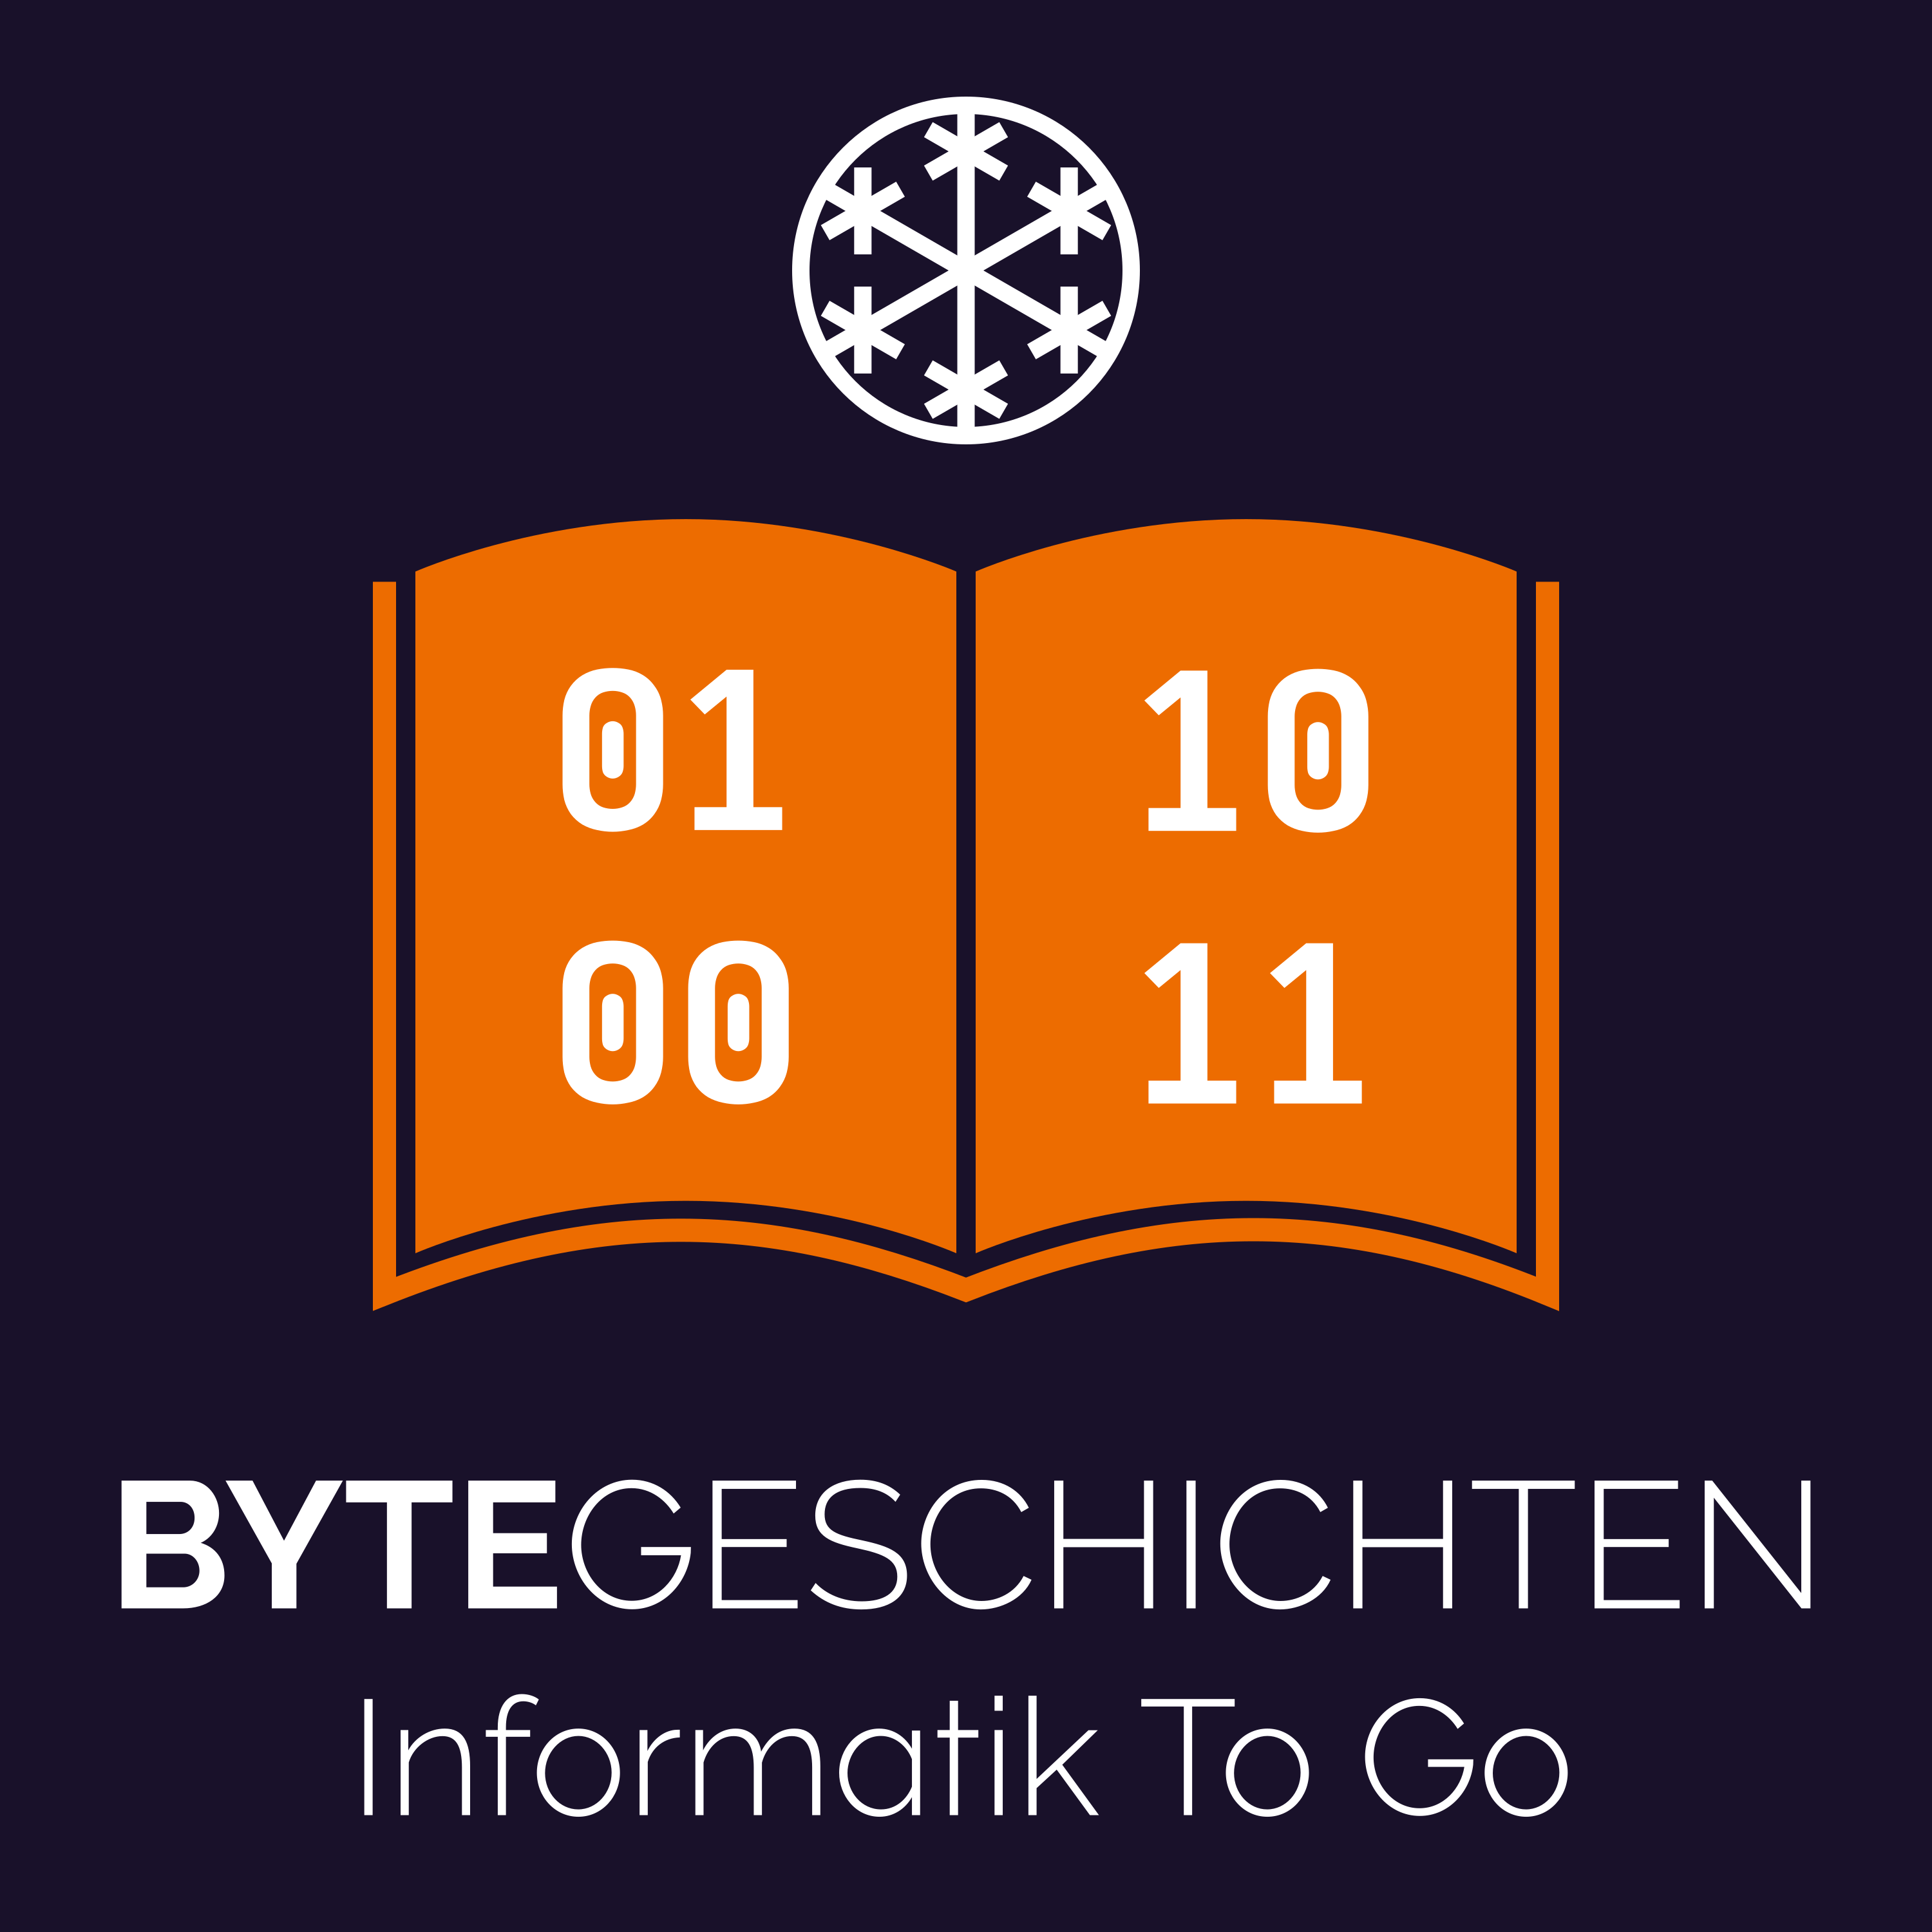 The cover image of Bytegeschichten.